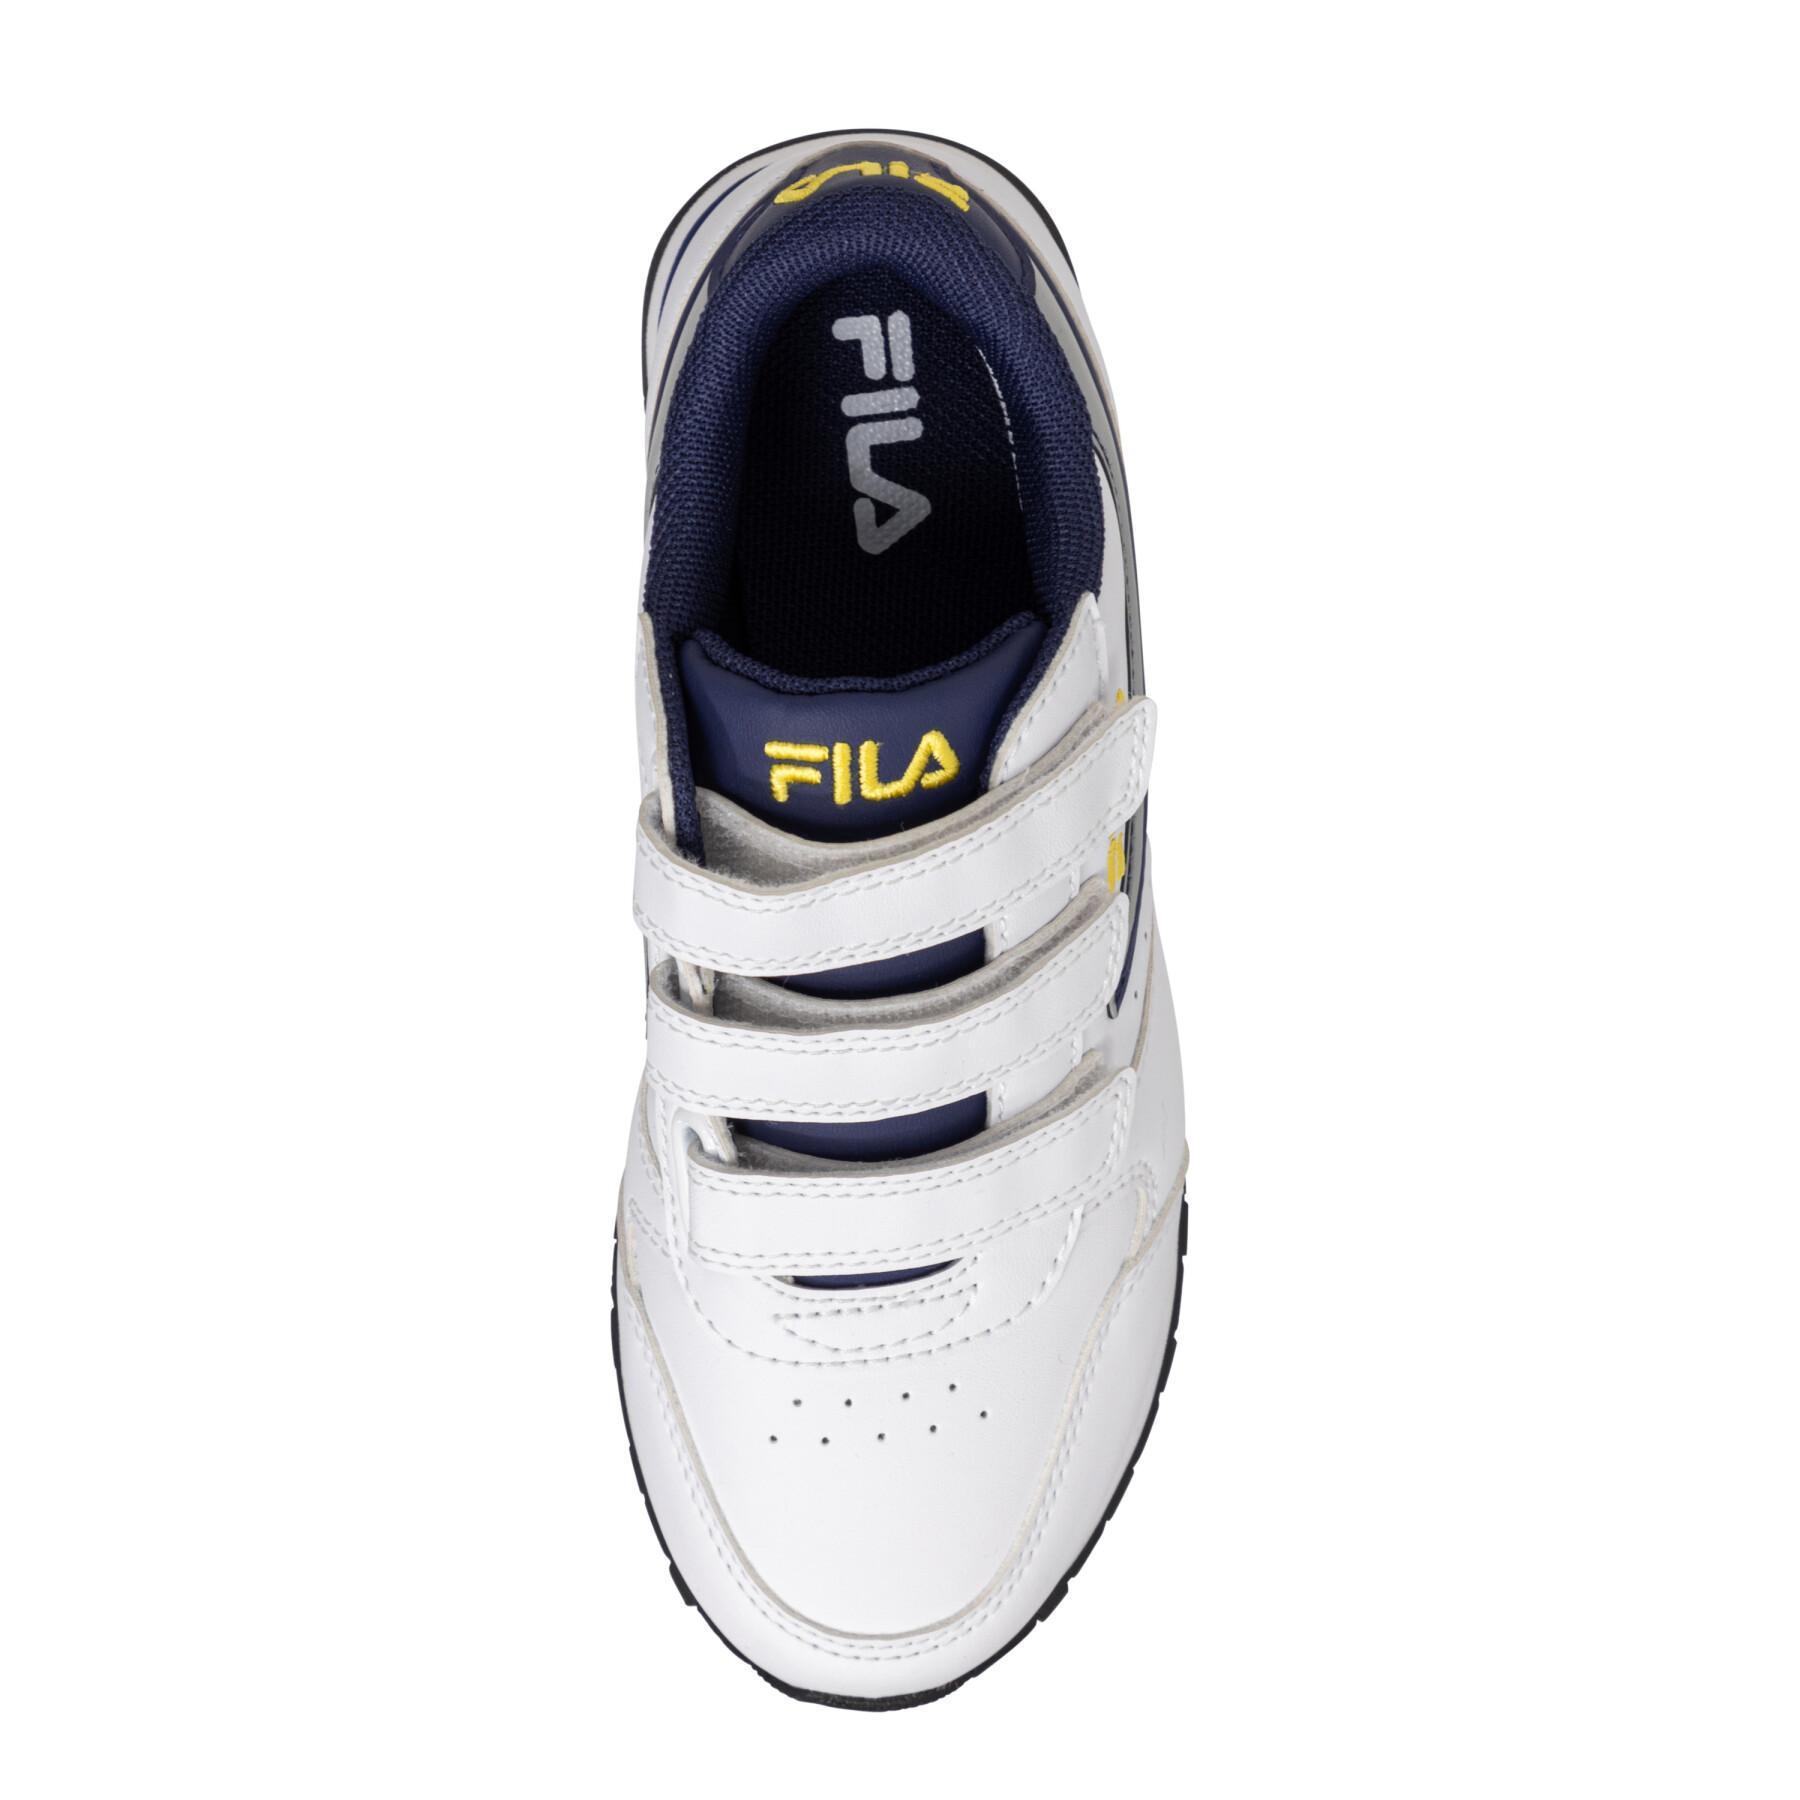 Velcro sneakers for kids Fila Orbit